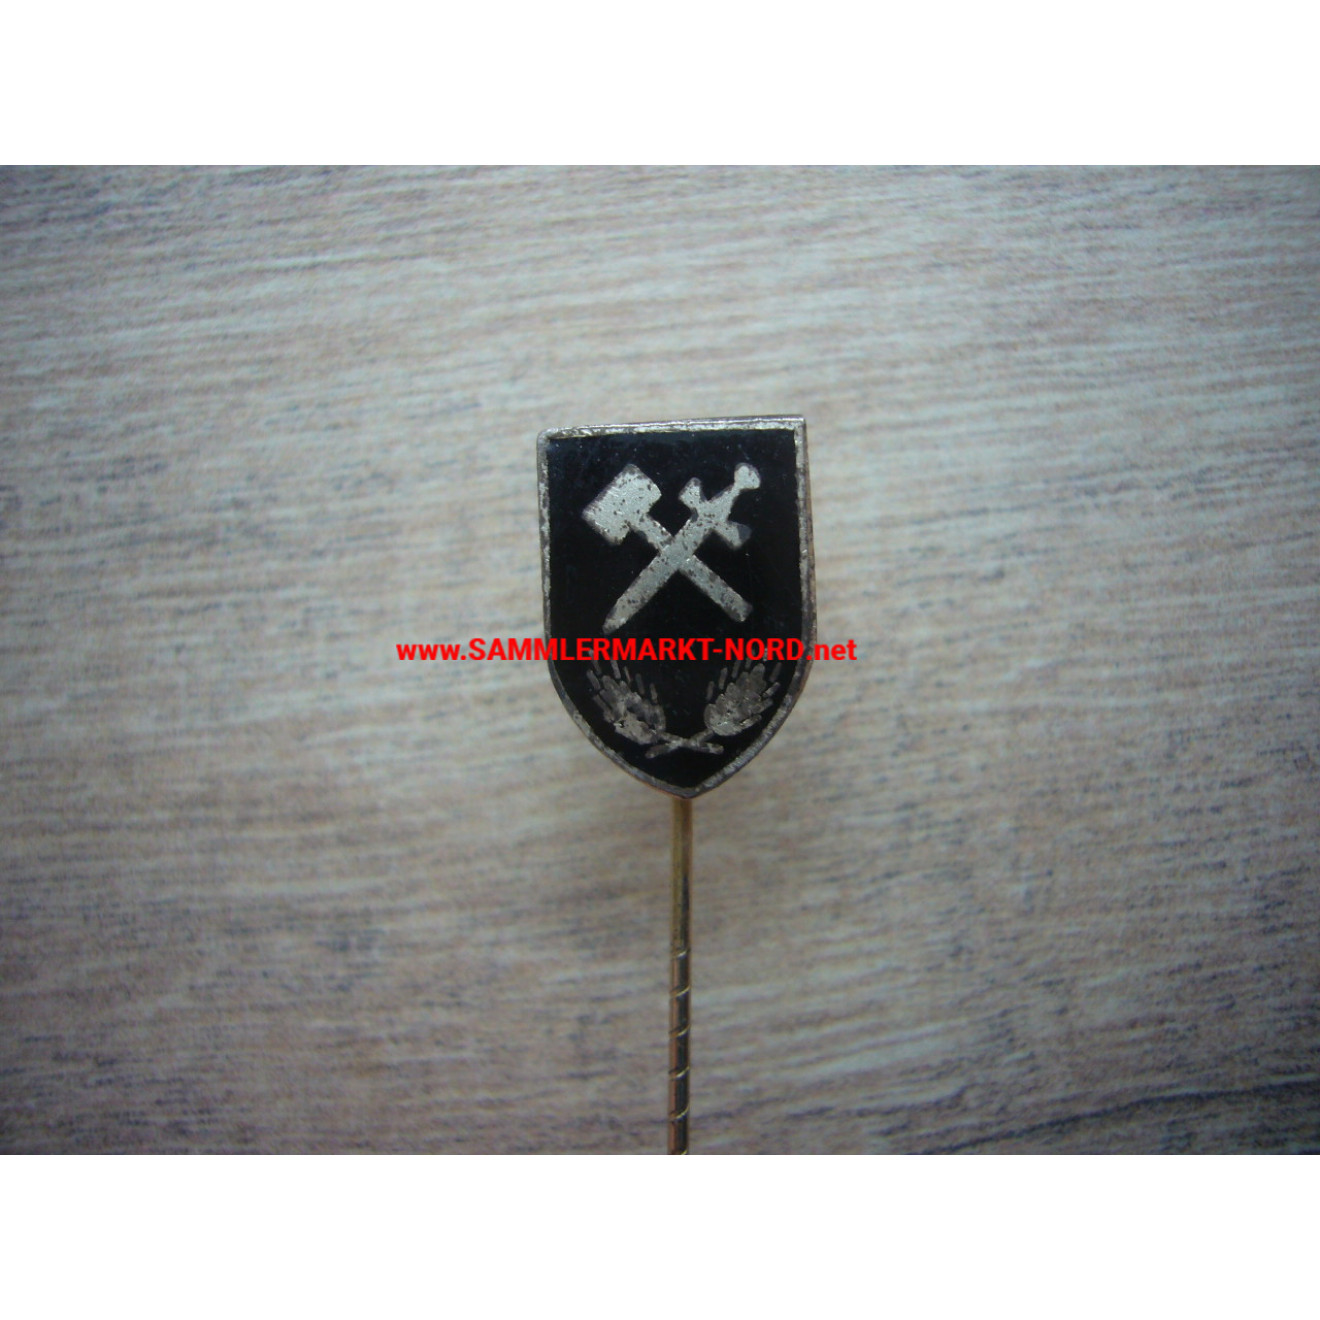 Combat Community of Revolutionary National Socialists (Black Front) - Membership Badge